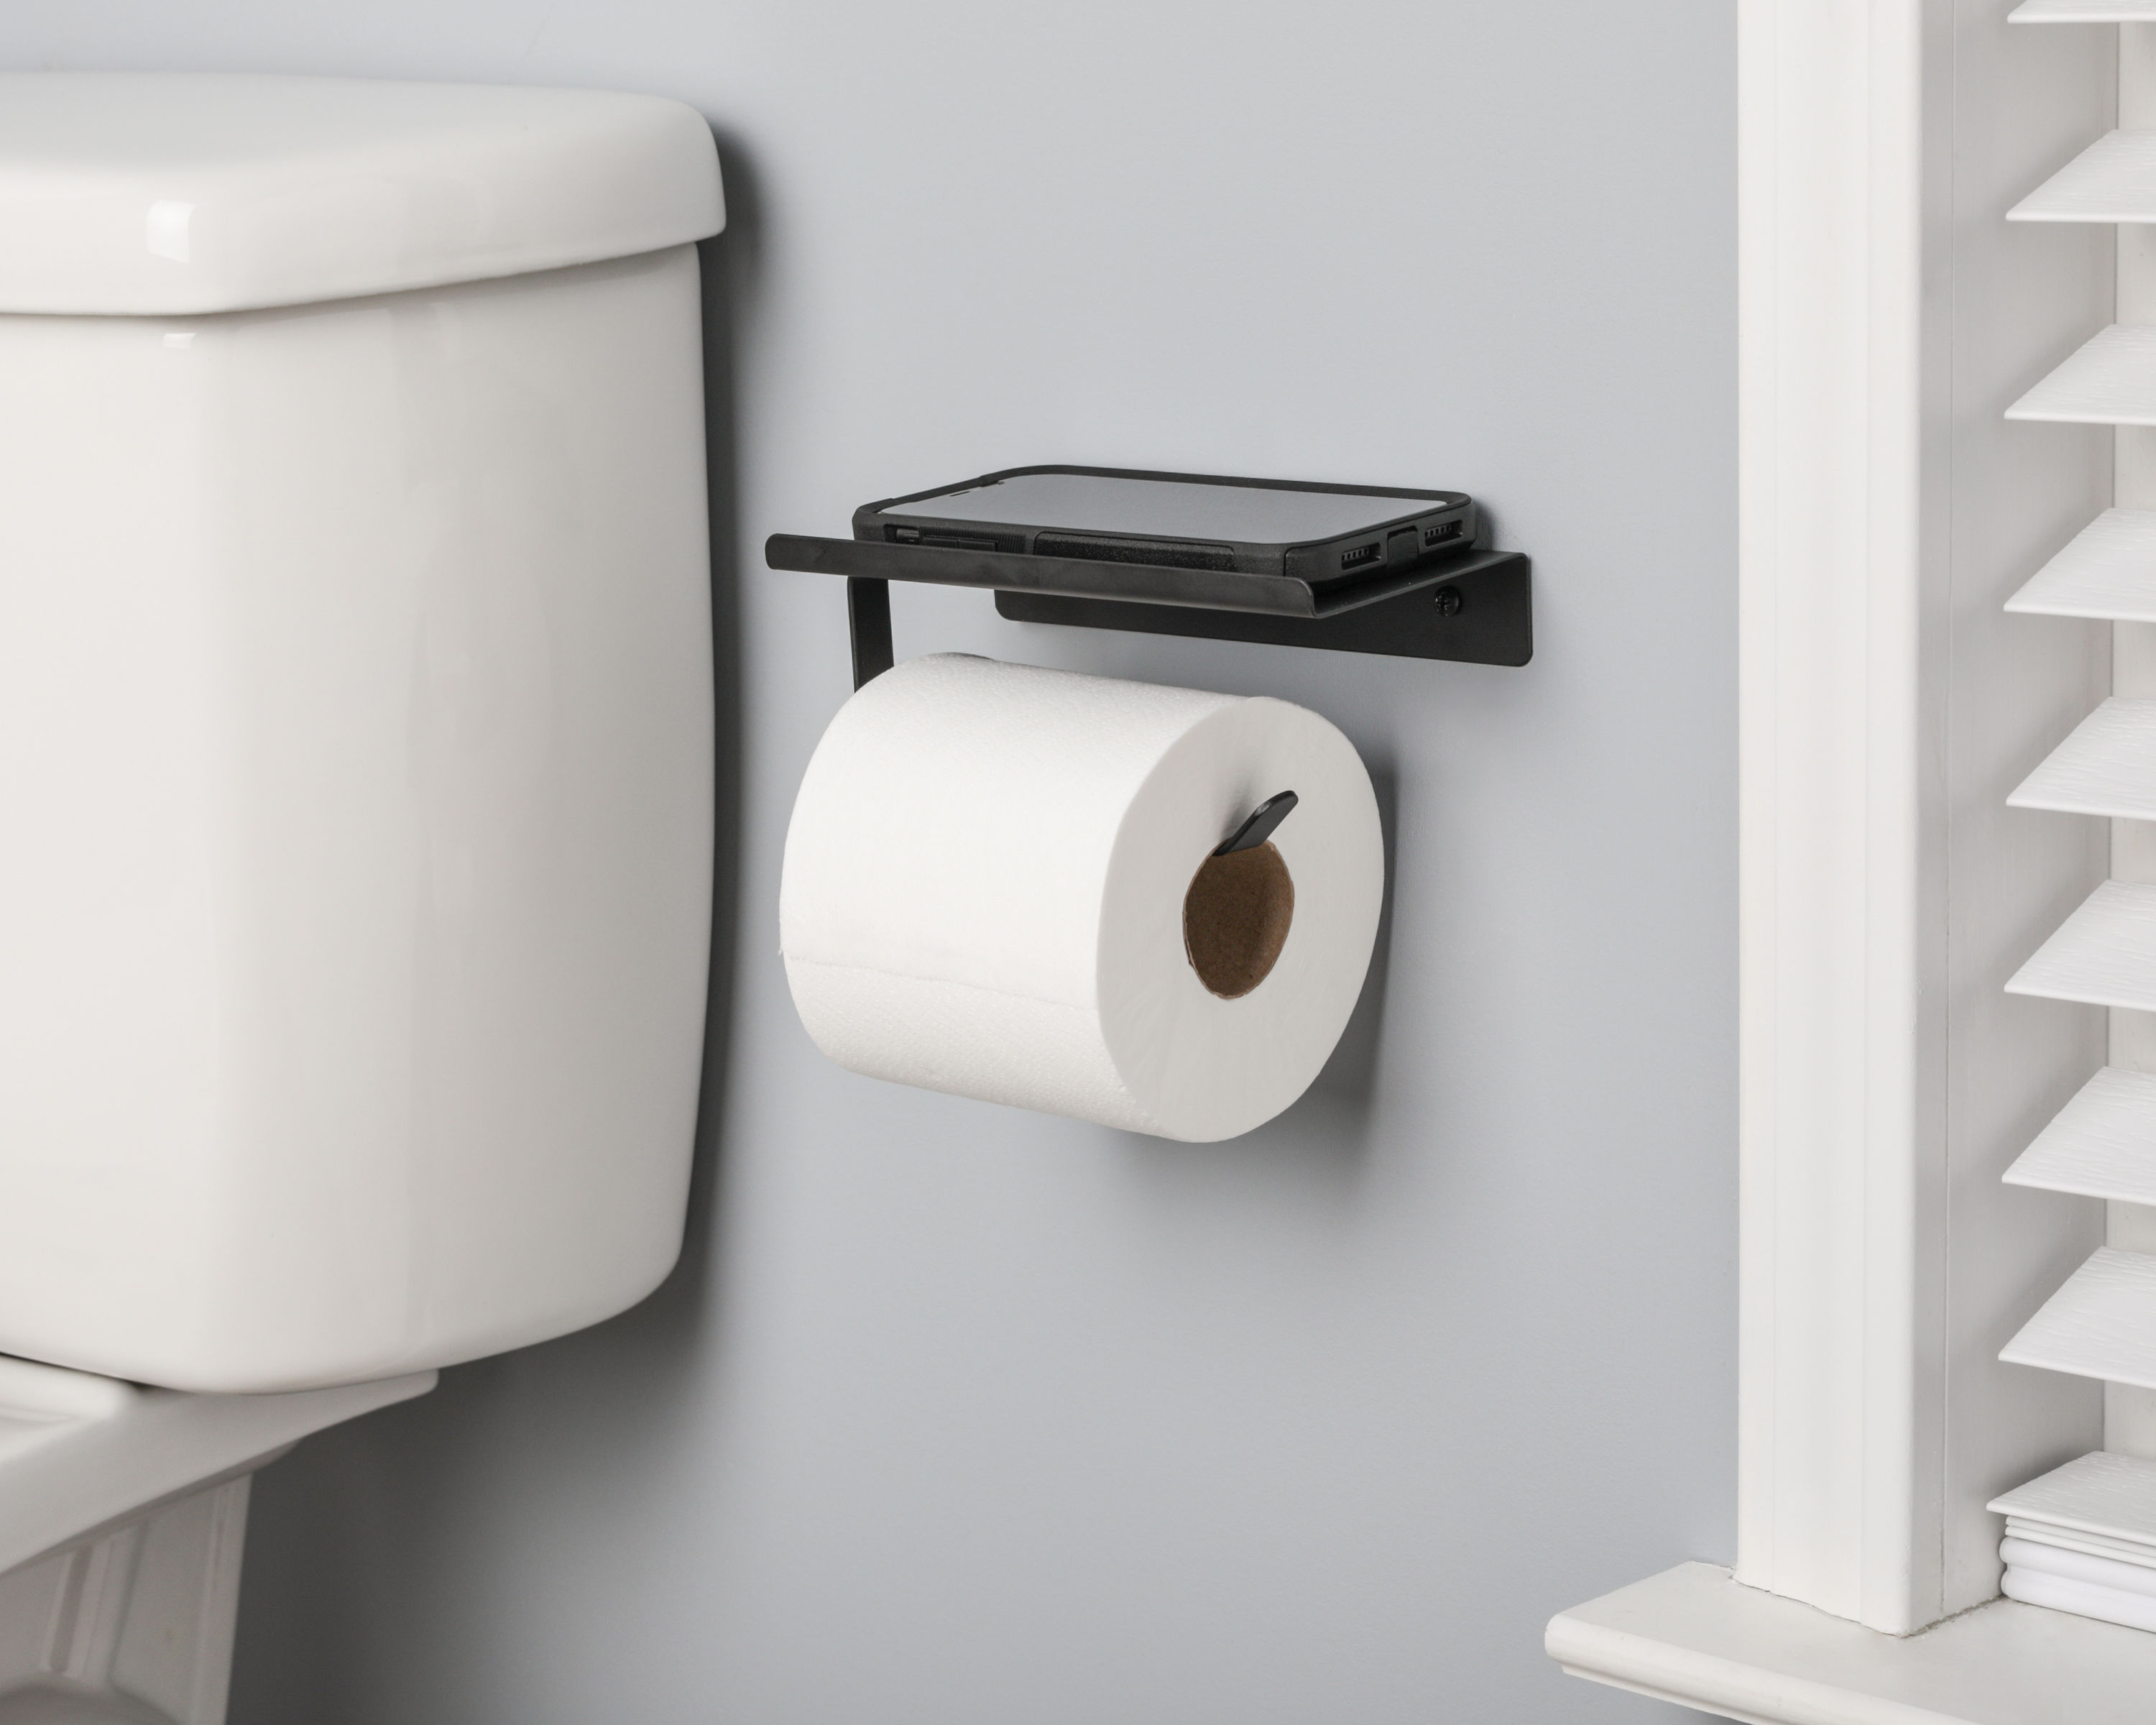 YANGQIHOME Matte Black Wall Mount Toilet Paper Holder 6 Inch 304 Stainless Steel Tissue Paper Dispenser for Bathroom & Kitchen Silver